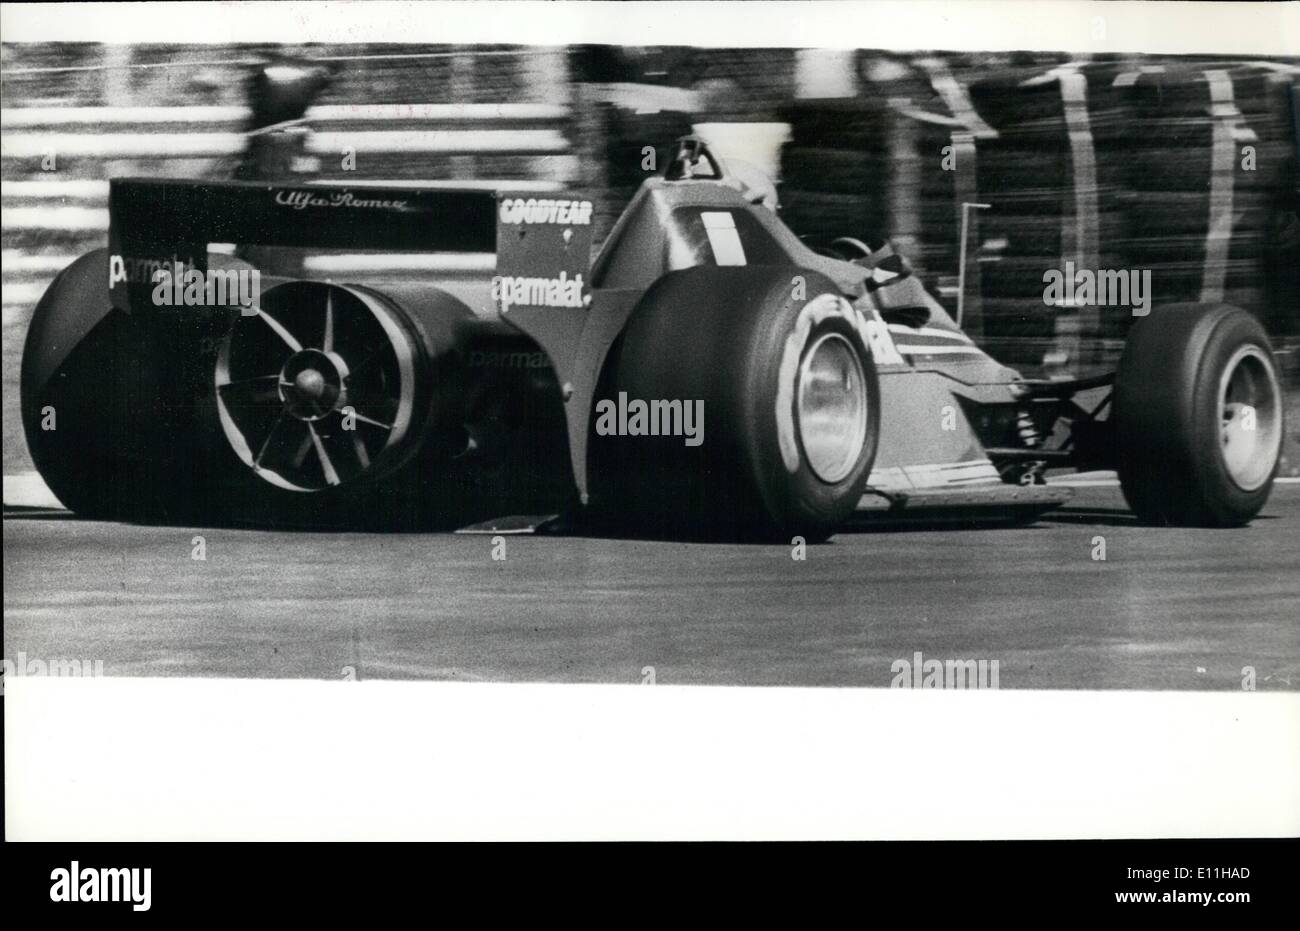 https://c8.alamy.com/comp/E11HAD/jun-06-1978-niki-lauda-wins-the-swedish-grand-prix-niki-lauda-driving-E11HAD.jpg